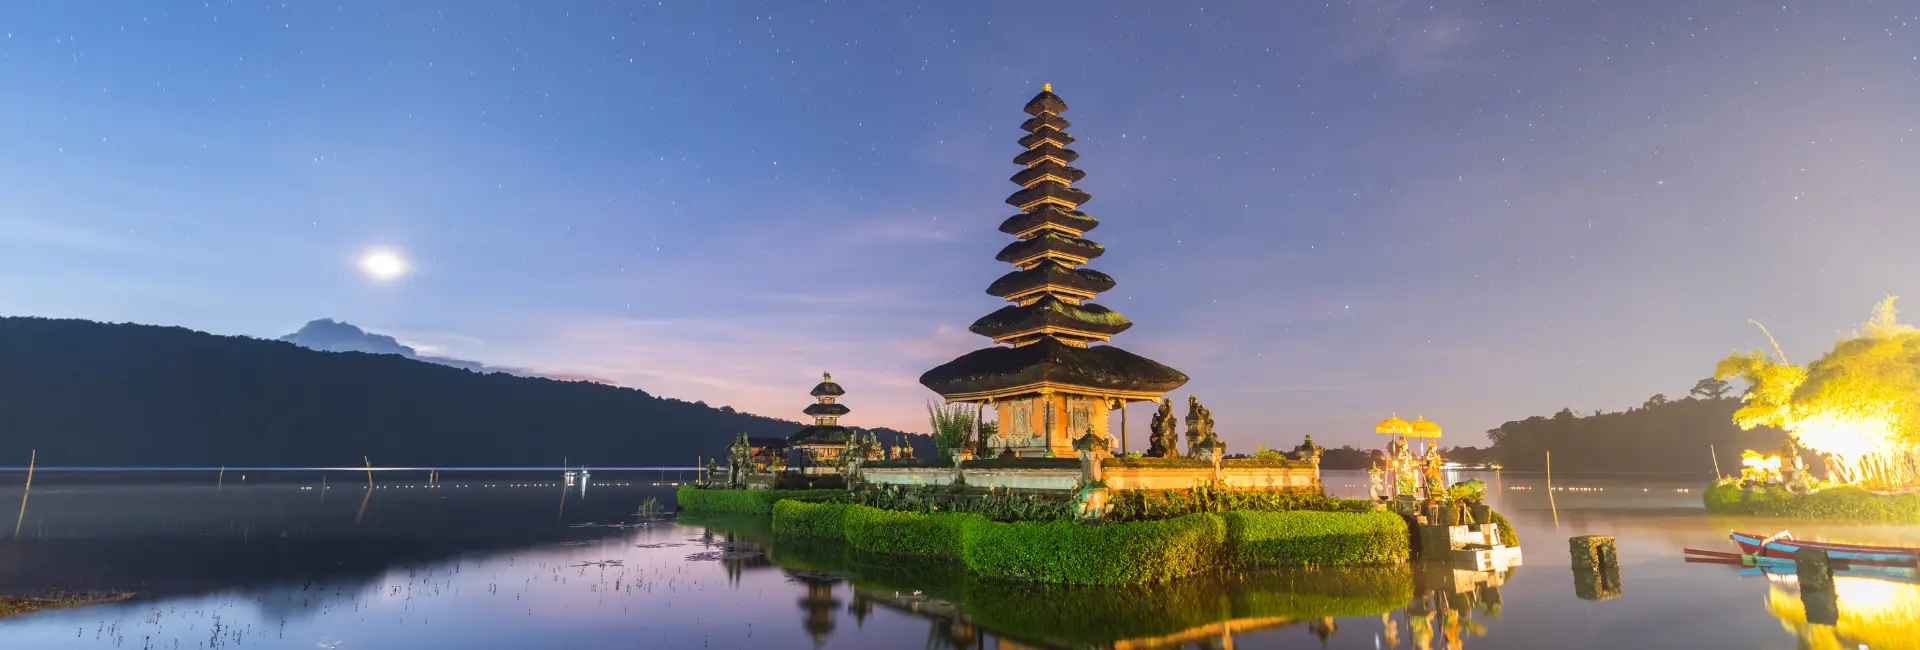 Indonezia - Bali